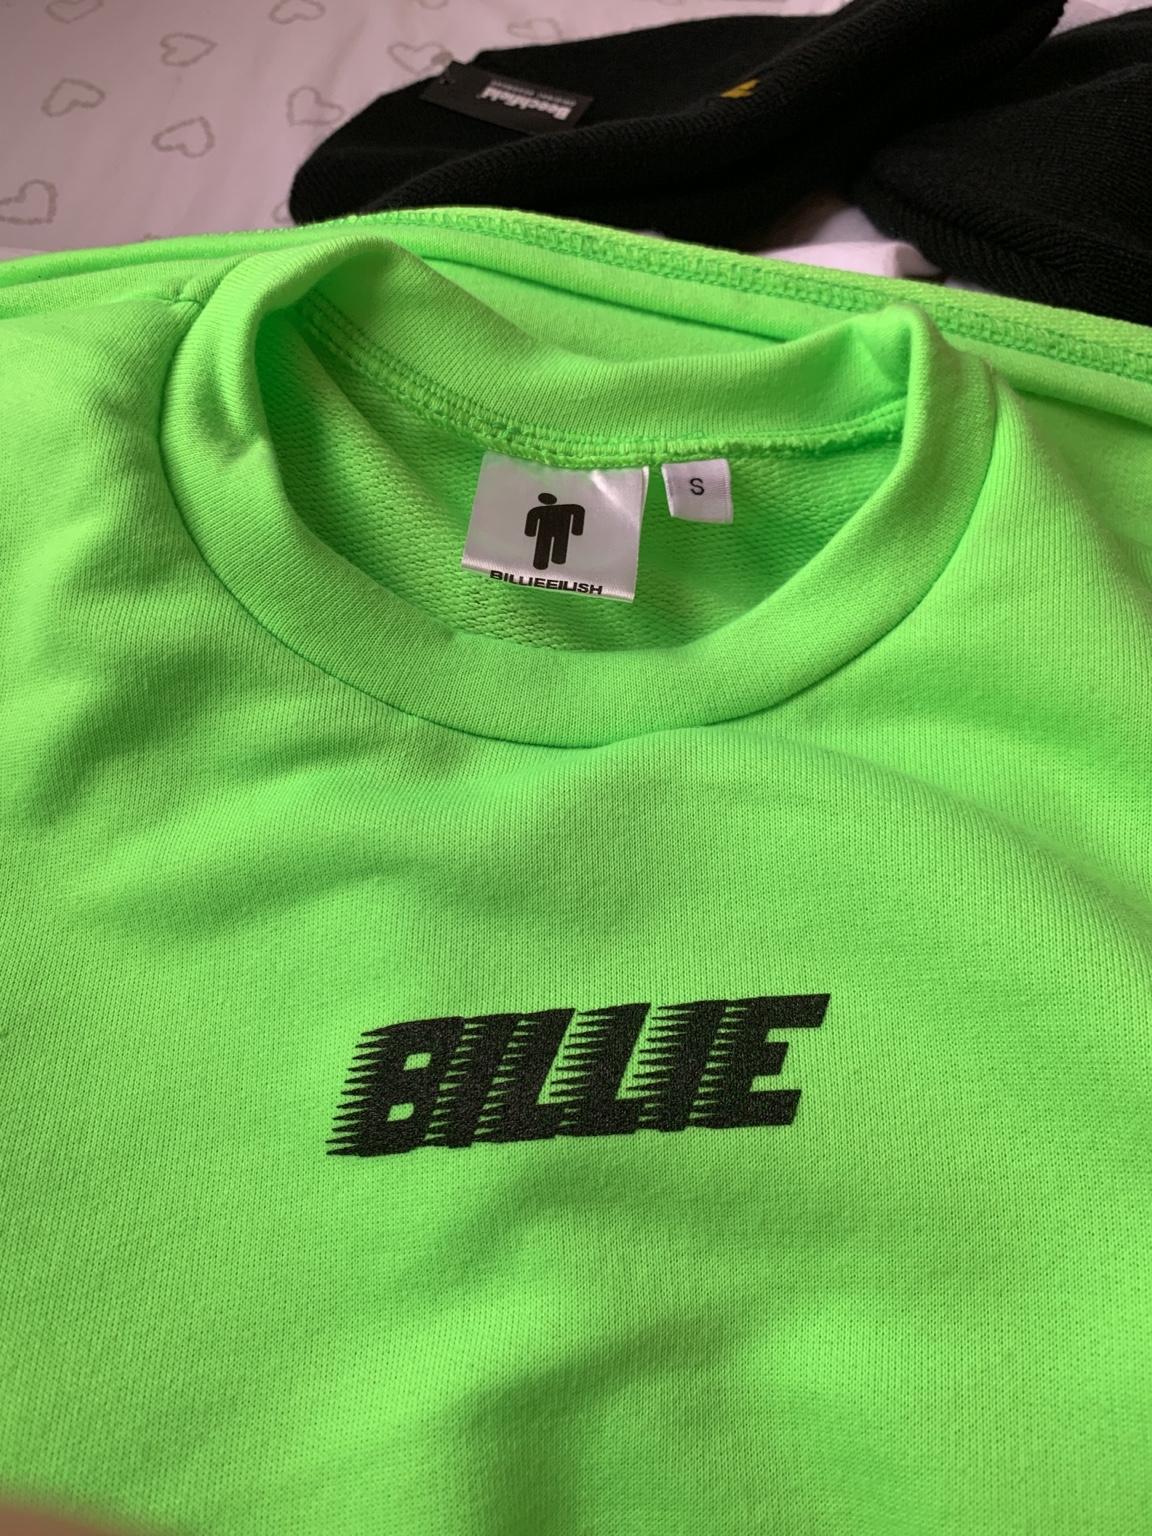 Billie Eilish Green Neon T Shirt In W3 London Borough Of Ealing